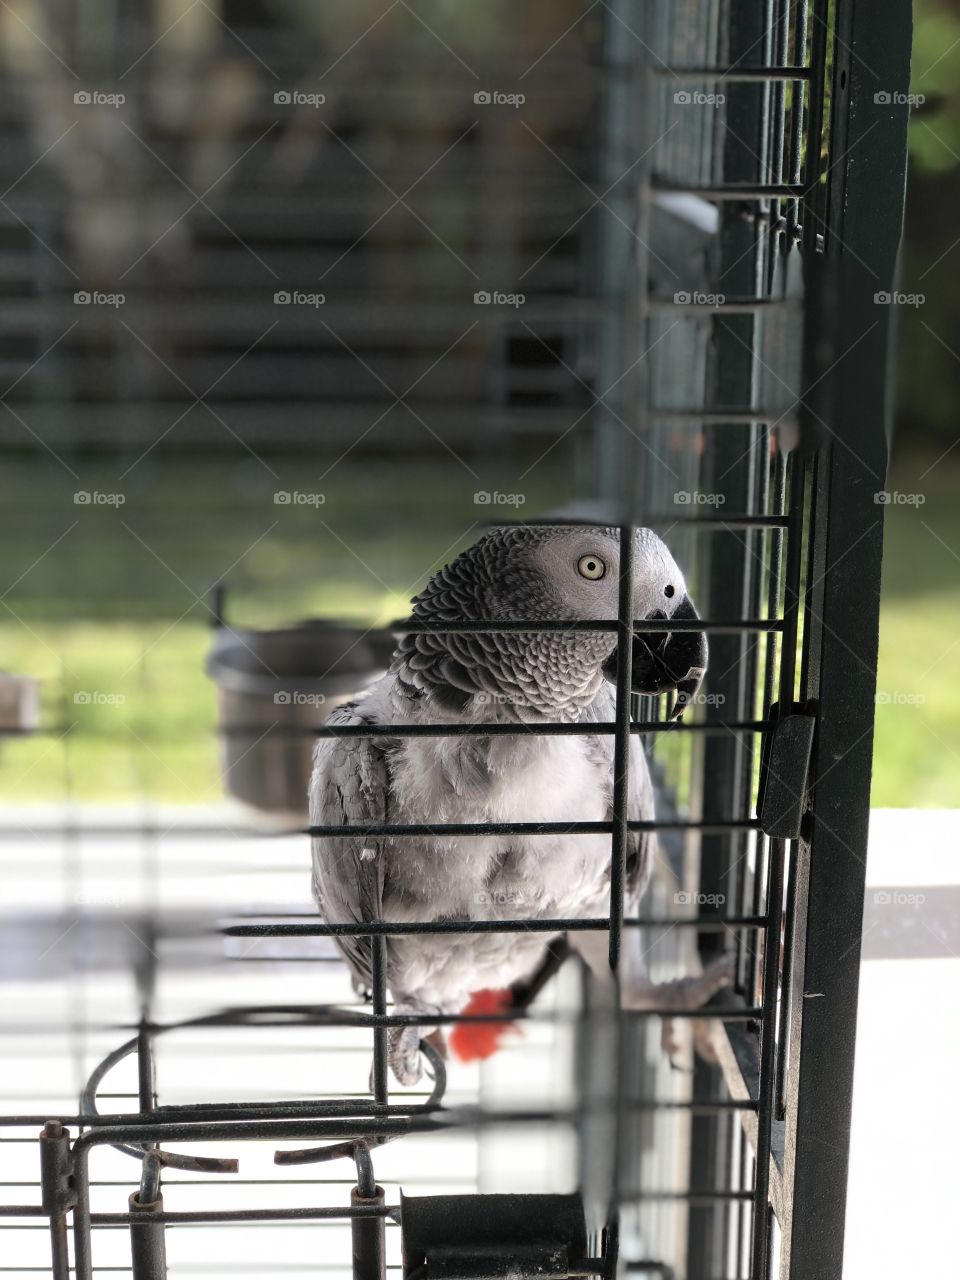 Sebastian the parrot ♥️